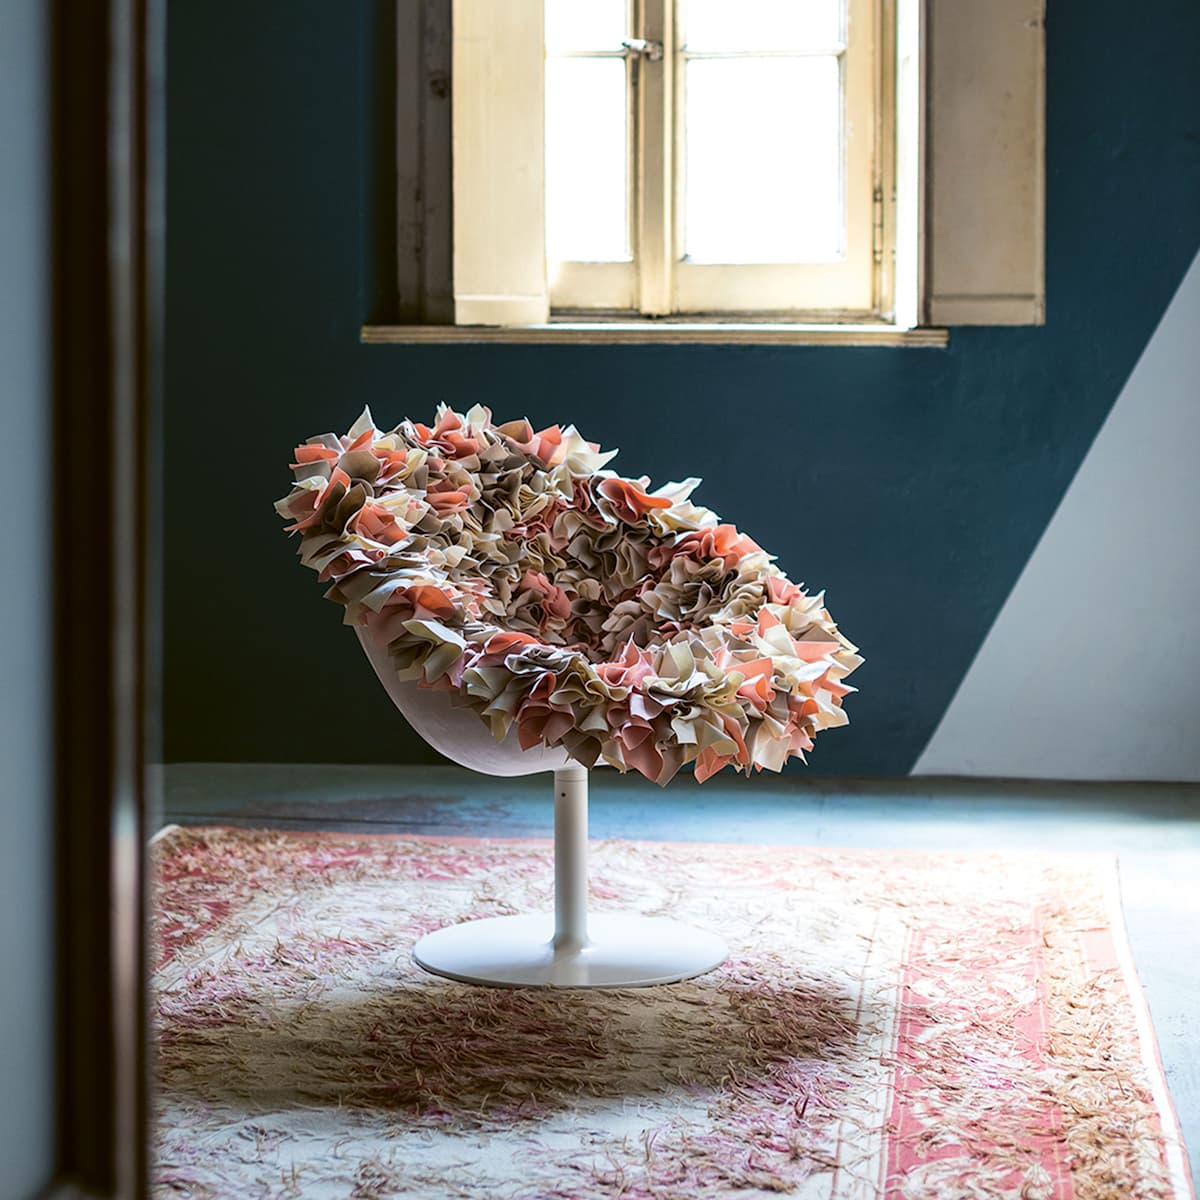 Blossom Vase by Tokujin Yoshioka - Art of Living - Home